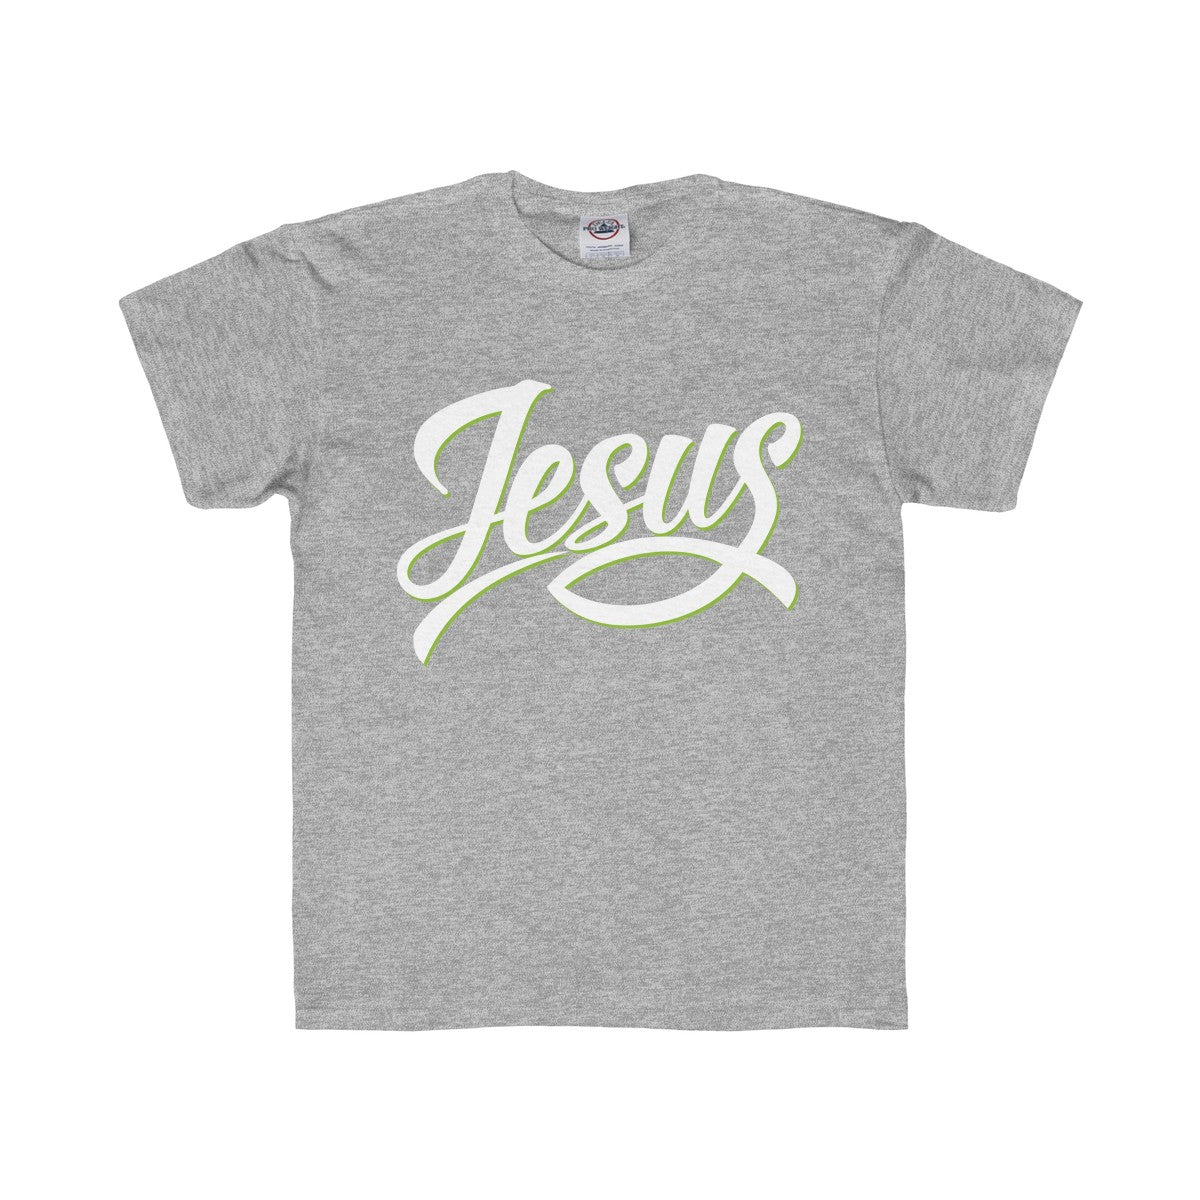 Jesus with Fish Design Kids Regular Fit Tee-Kids clothes-PureDesignTees